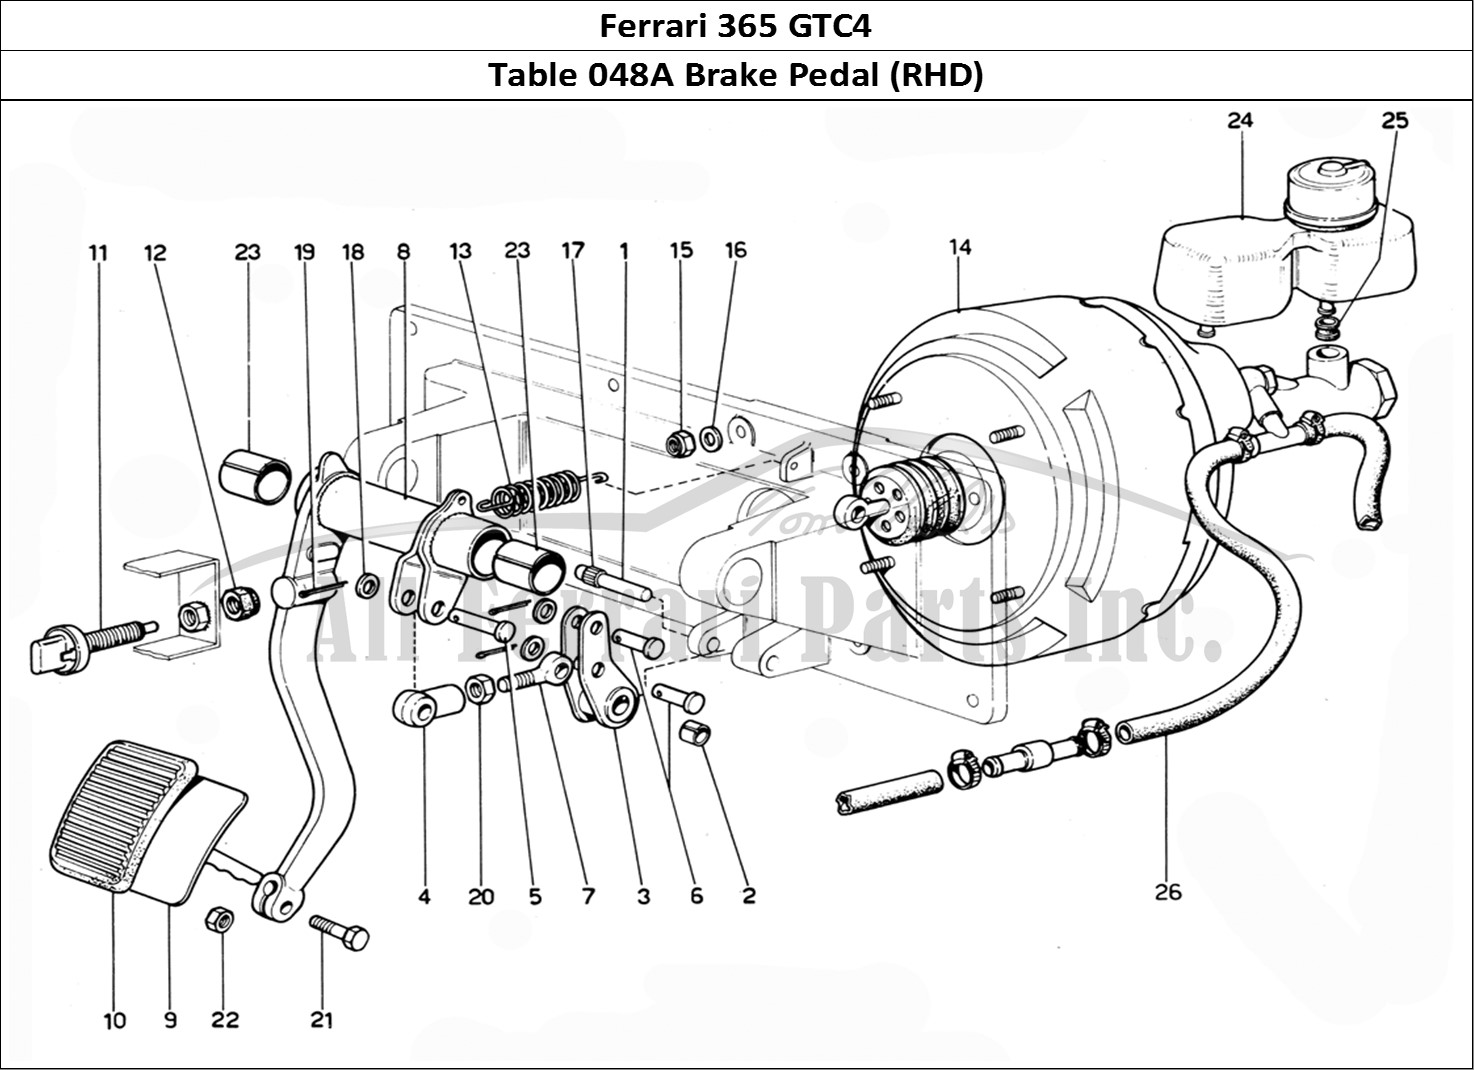 Ferrari Parts Ferrari 365 GTC4 (Mechanical) Page 048 Brake pedal (RHD)